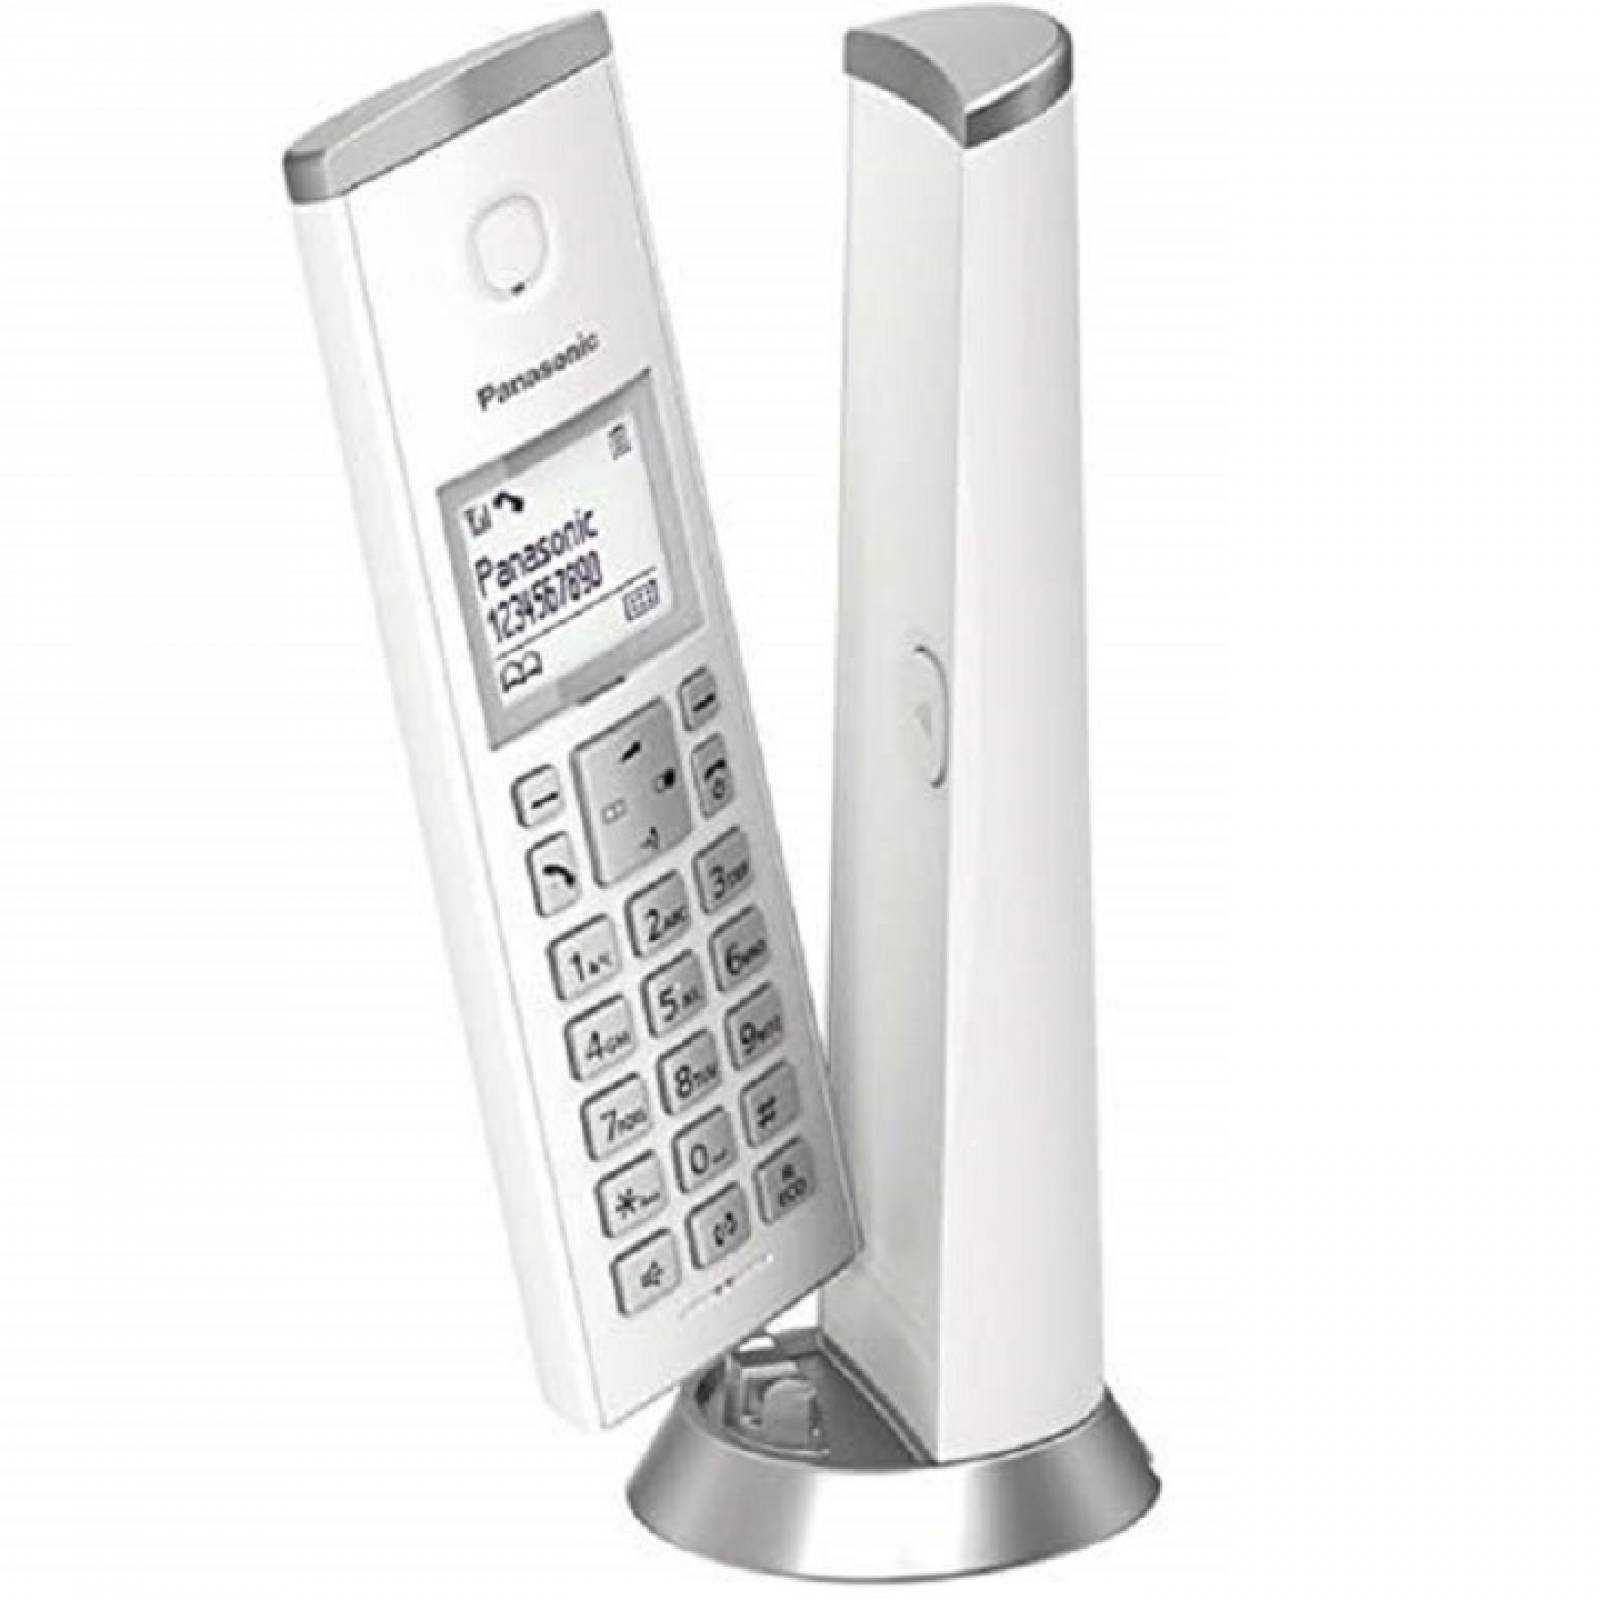 Teléfono inalámbrico Panasonic Blanco 1.9 Ghz KX-TGK210